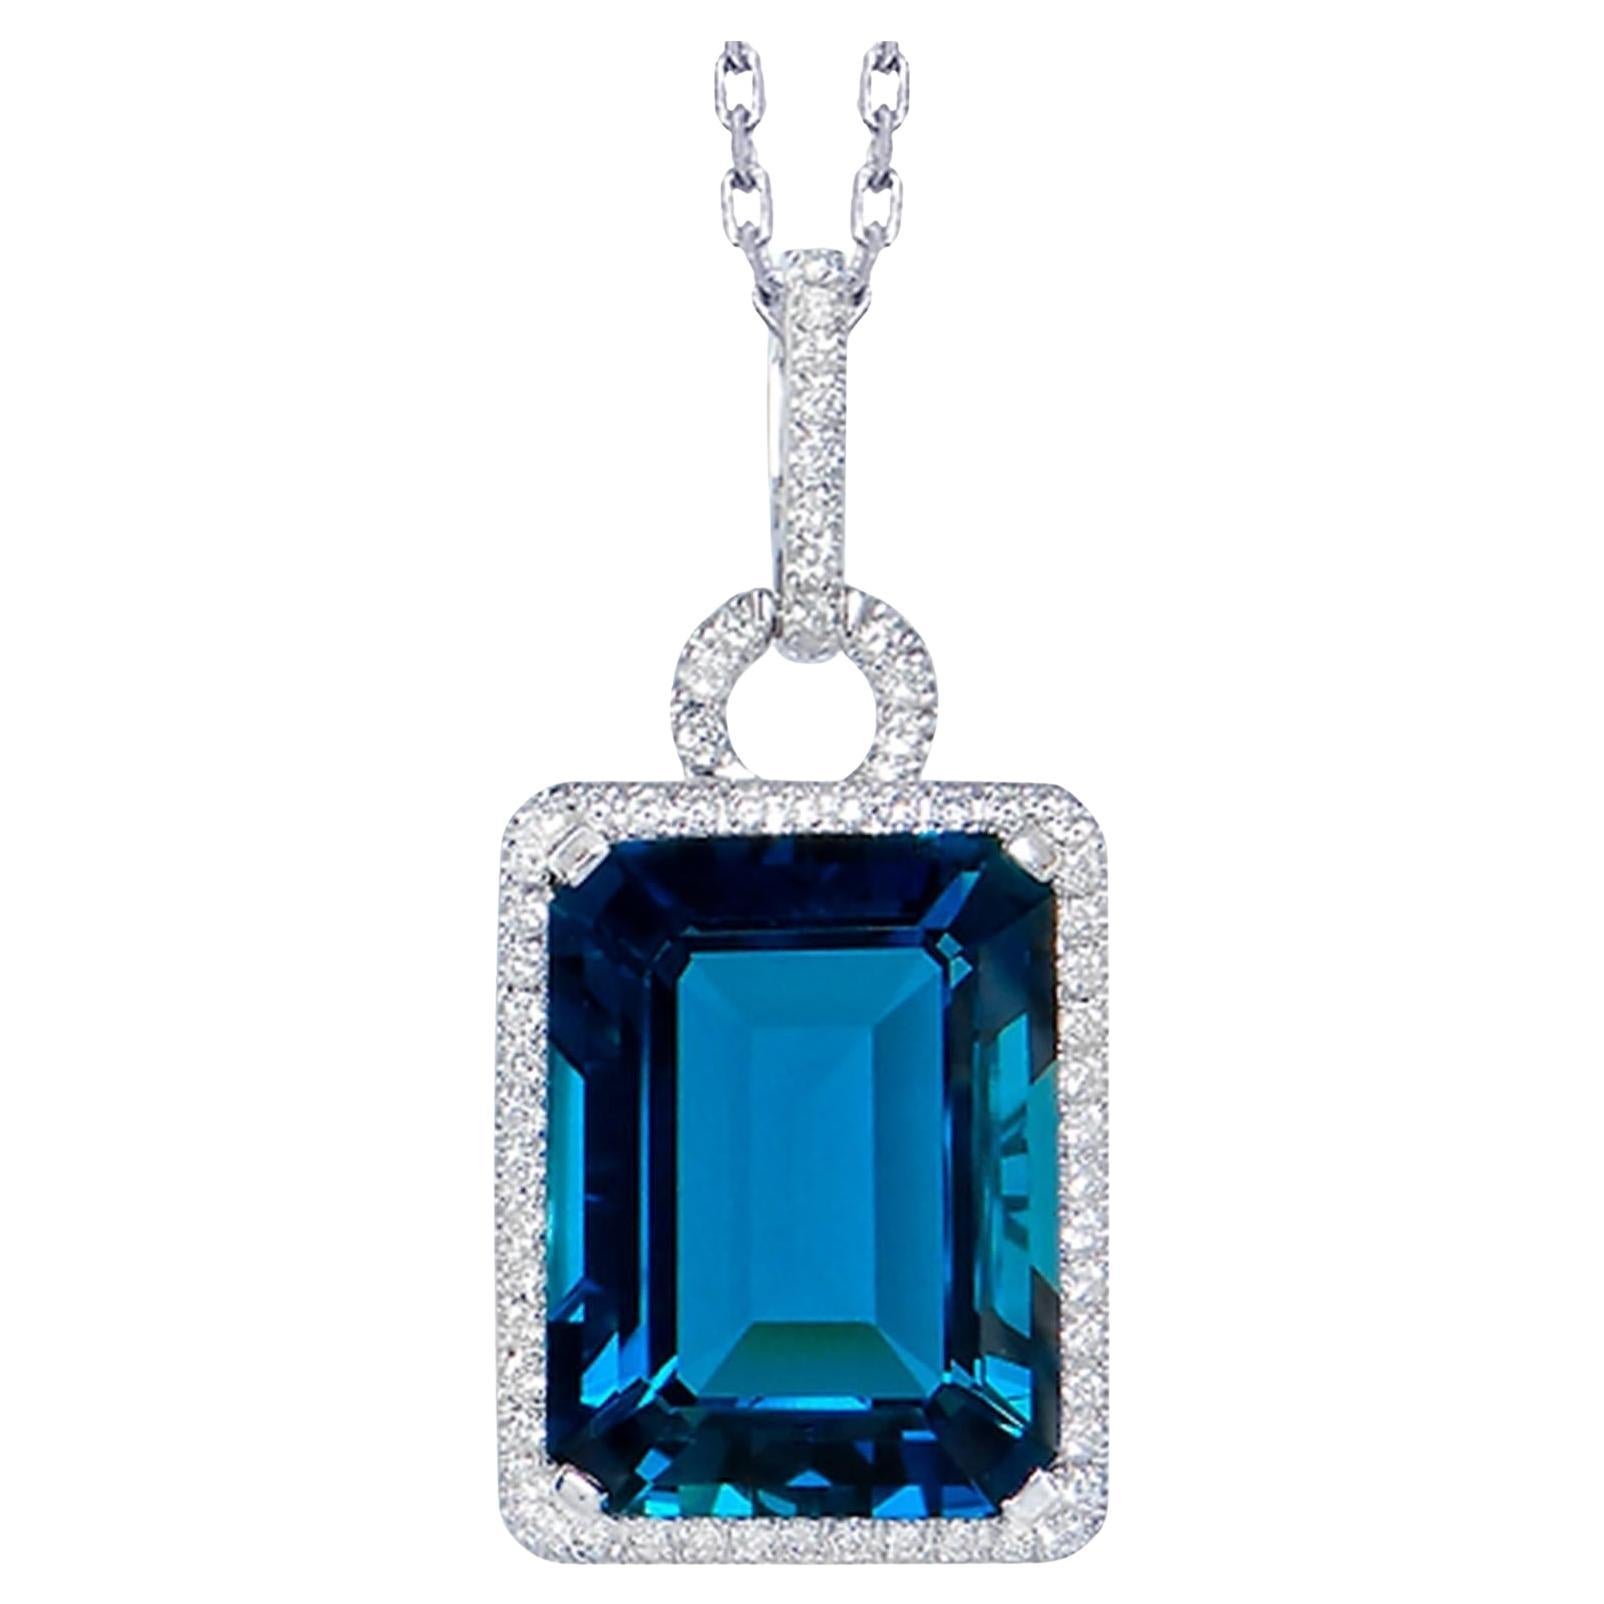 London Blue Topaz Pendant Necklace With Diamonds 14.47 Carats 18K White Gold For Sale